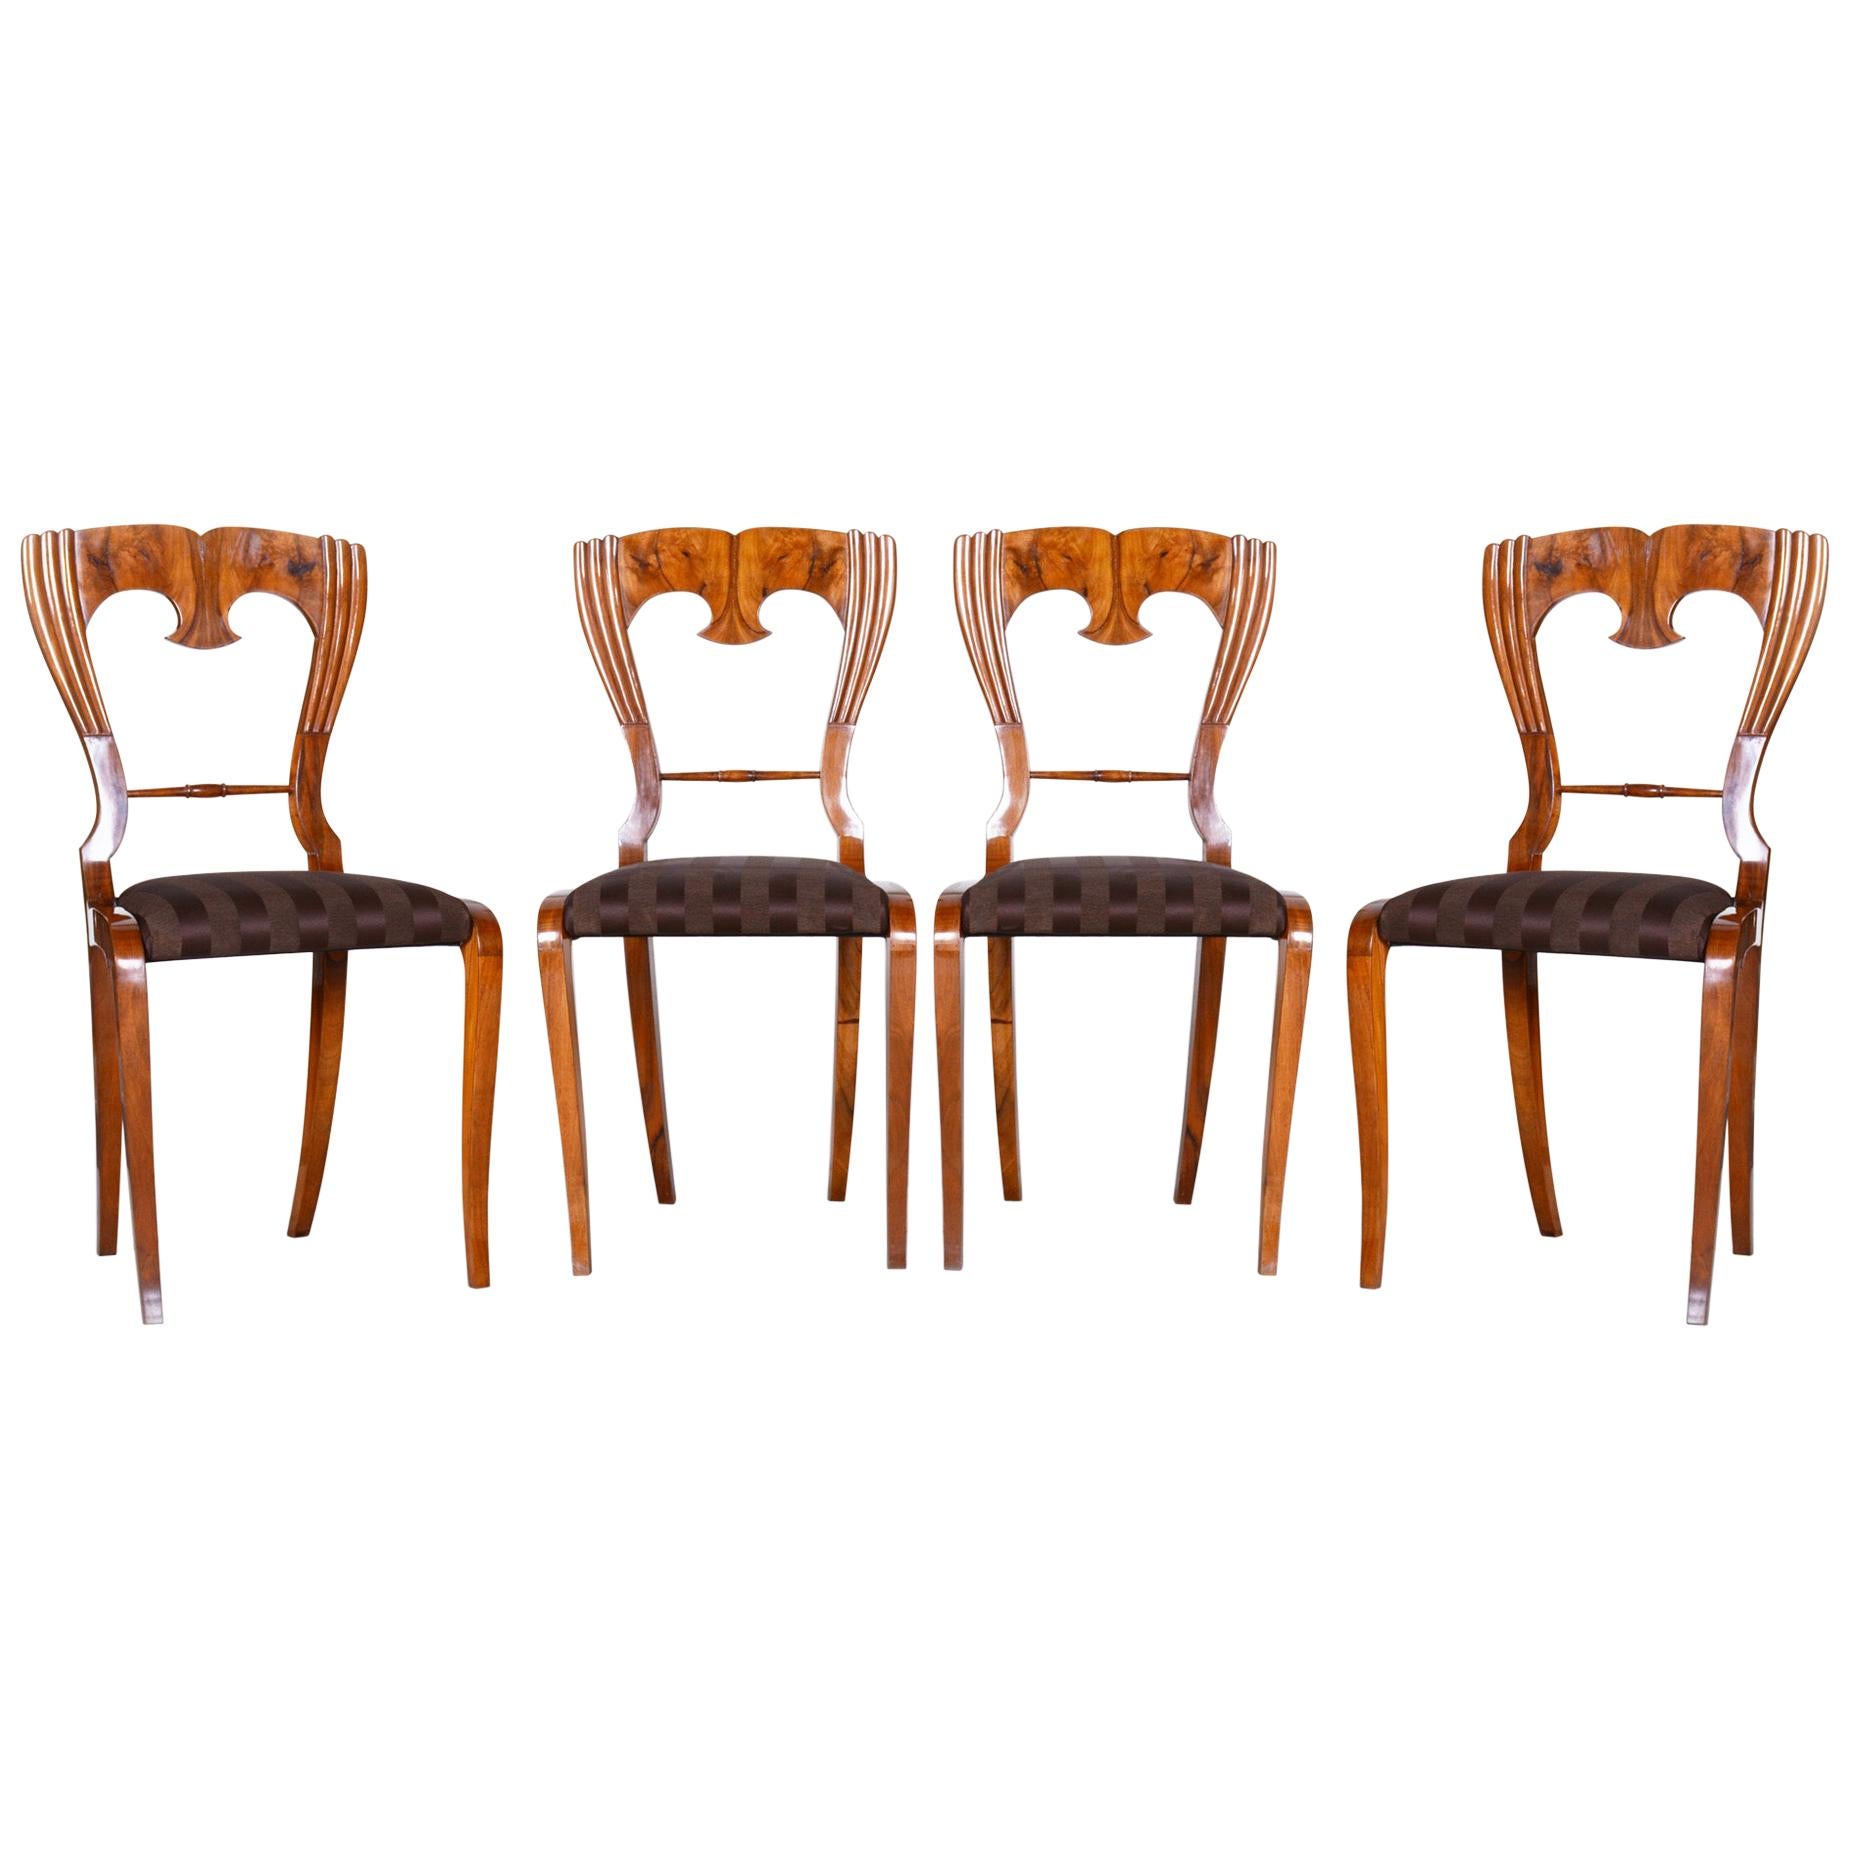 19th Century Walnut Czech Biedermeier Chairs Set of 4 Pieces, 1840-1849